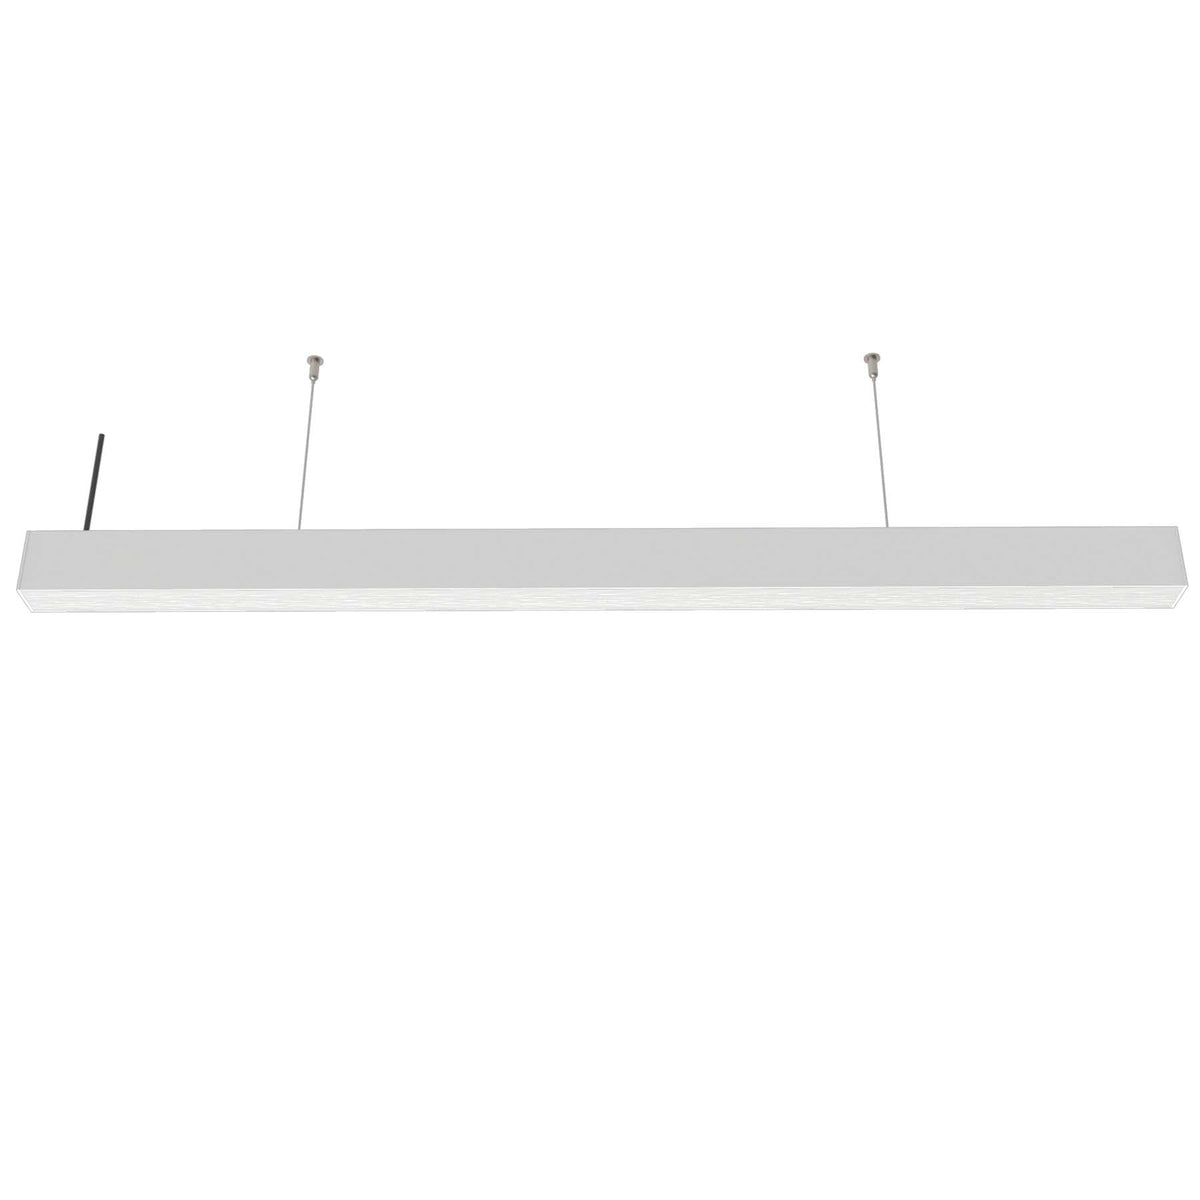 G.W.S LED Wholesale LED Linear Lights White LED Linear Light